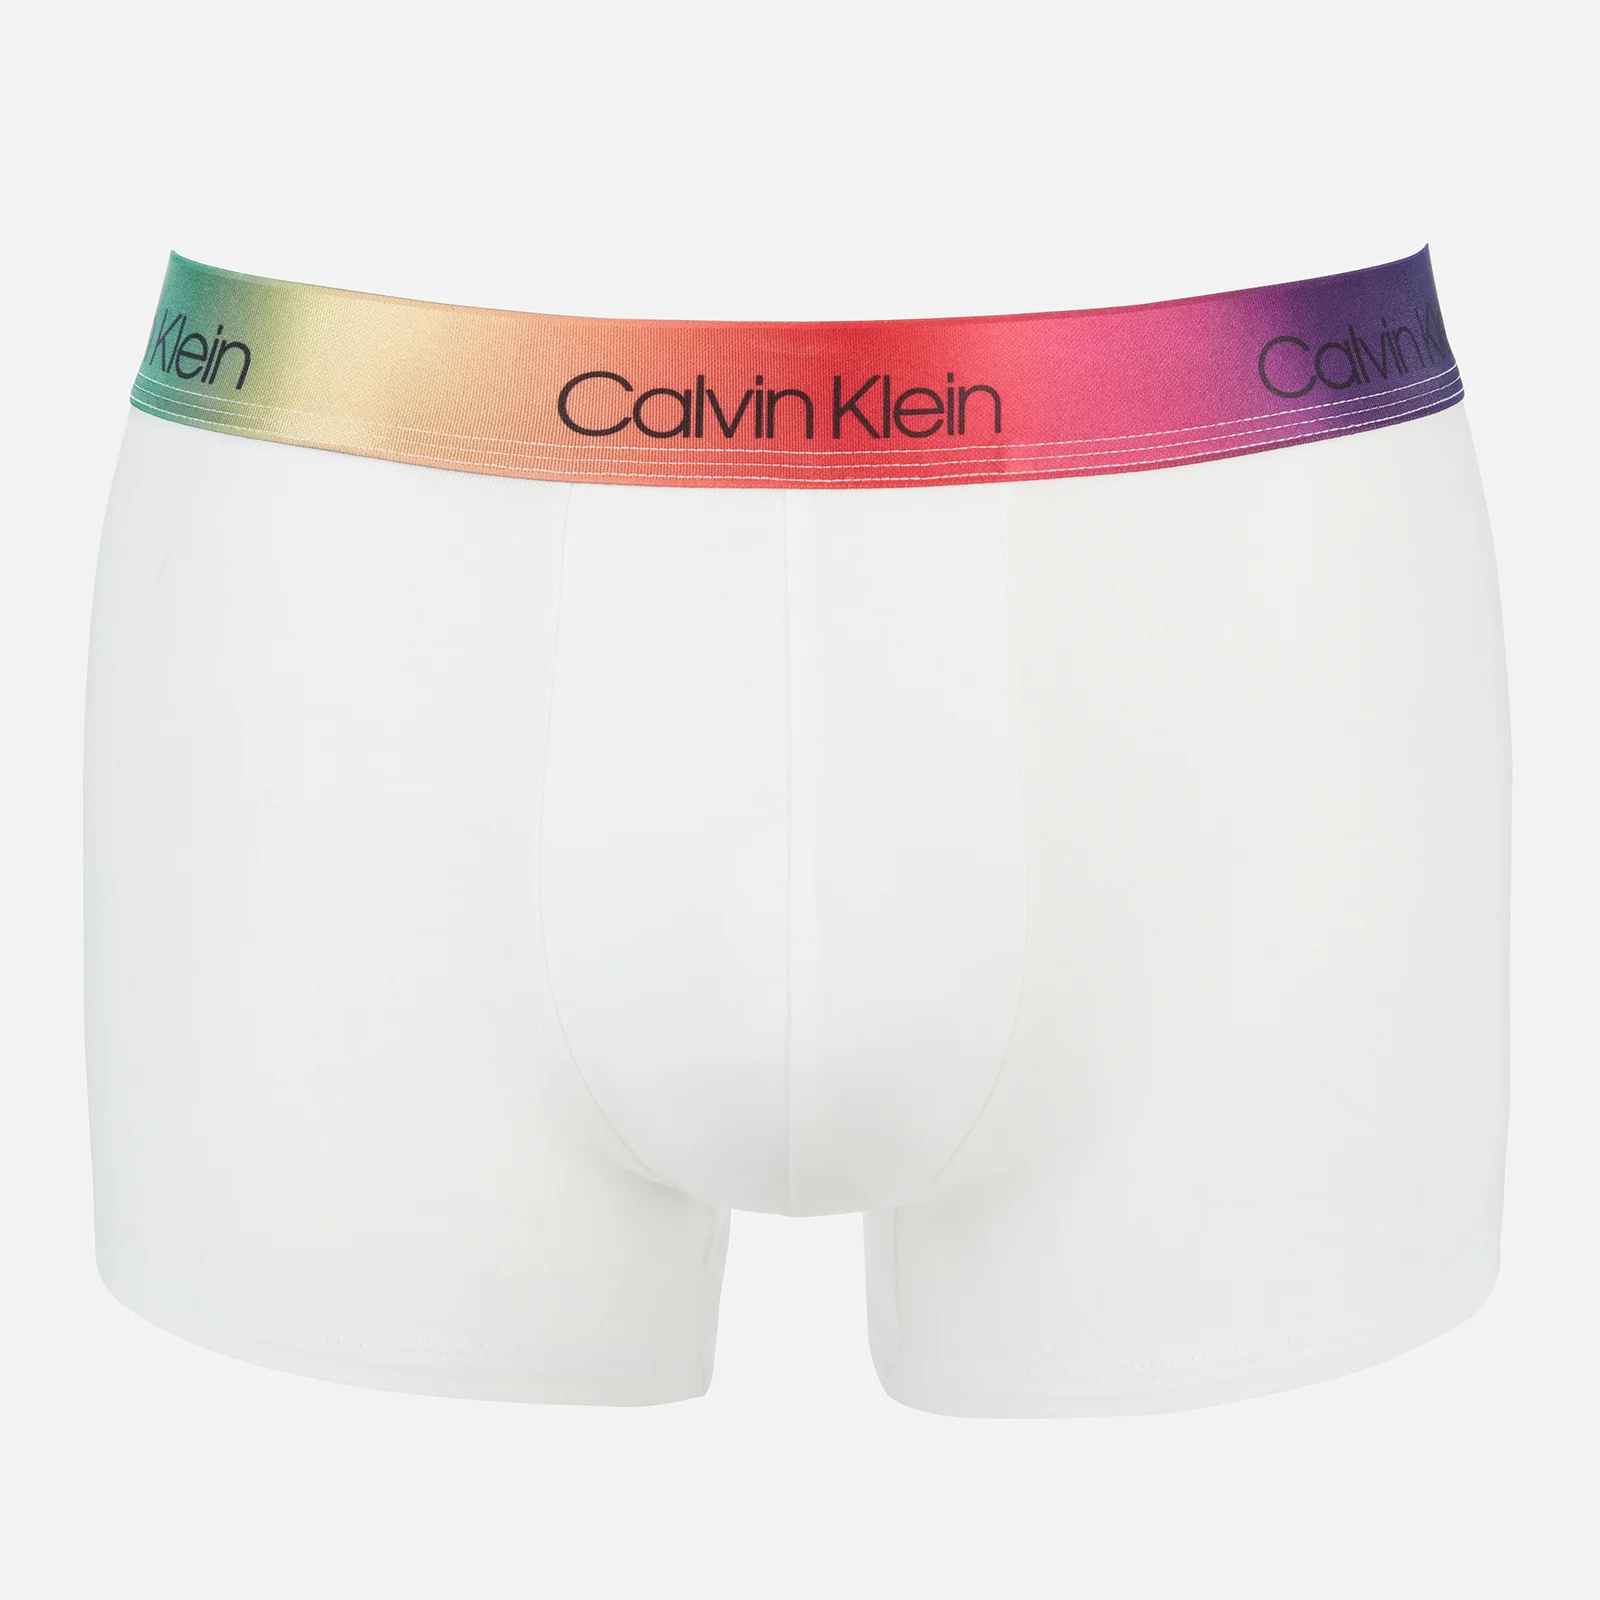 Calvin Klein Men's Rainbow Waistband Trunks - White Image 1